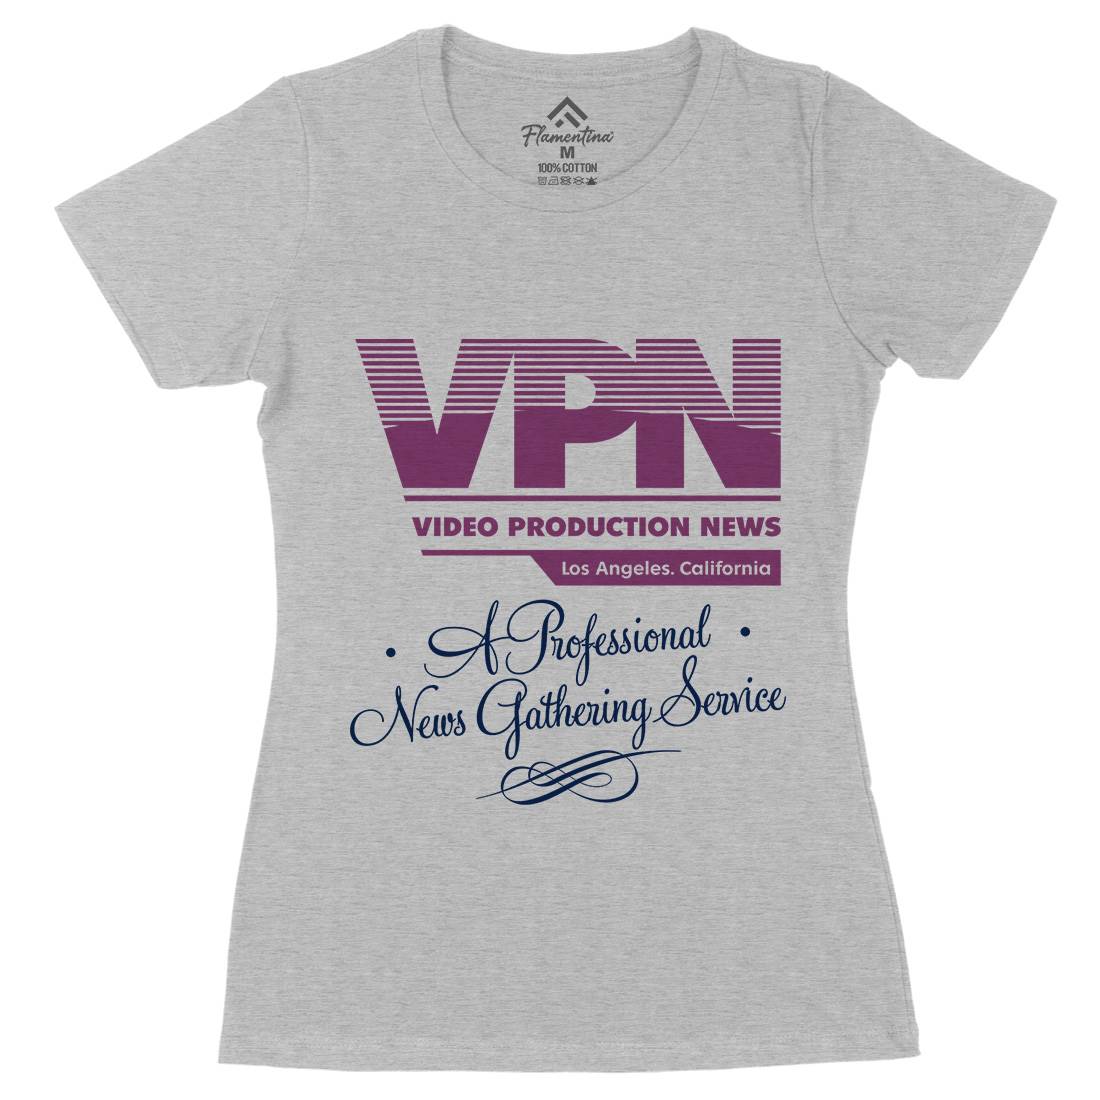 Video Production News Vpn Womens Organic Crew Neck T-Shirt Horror D132